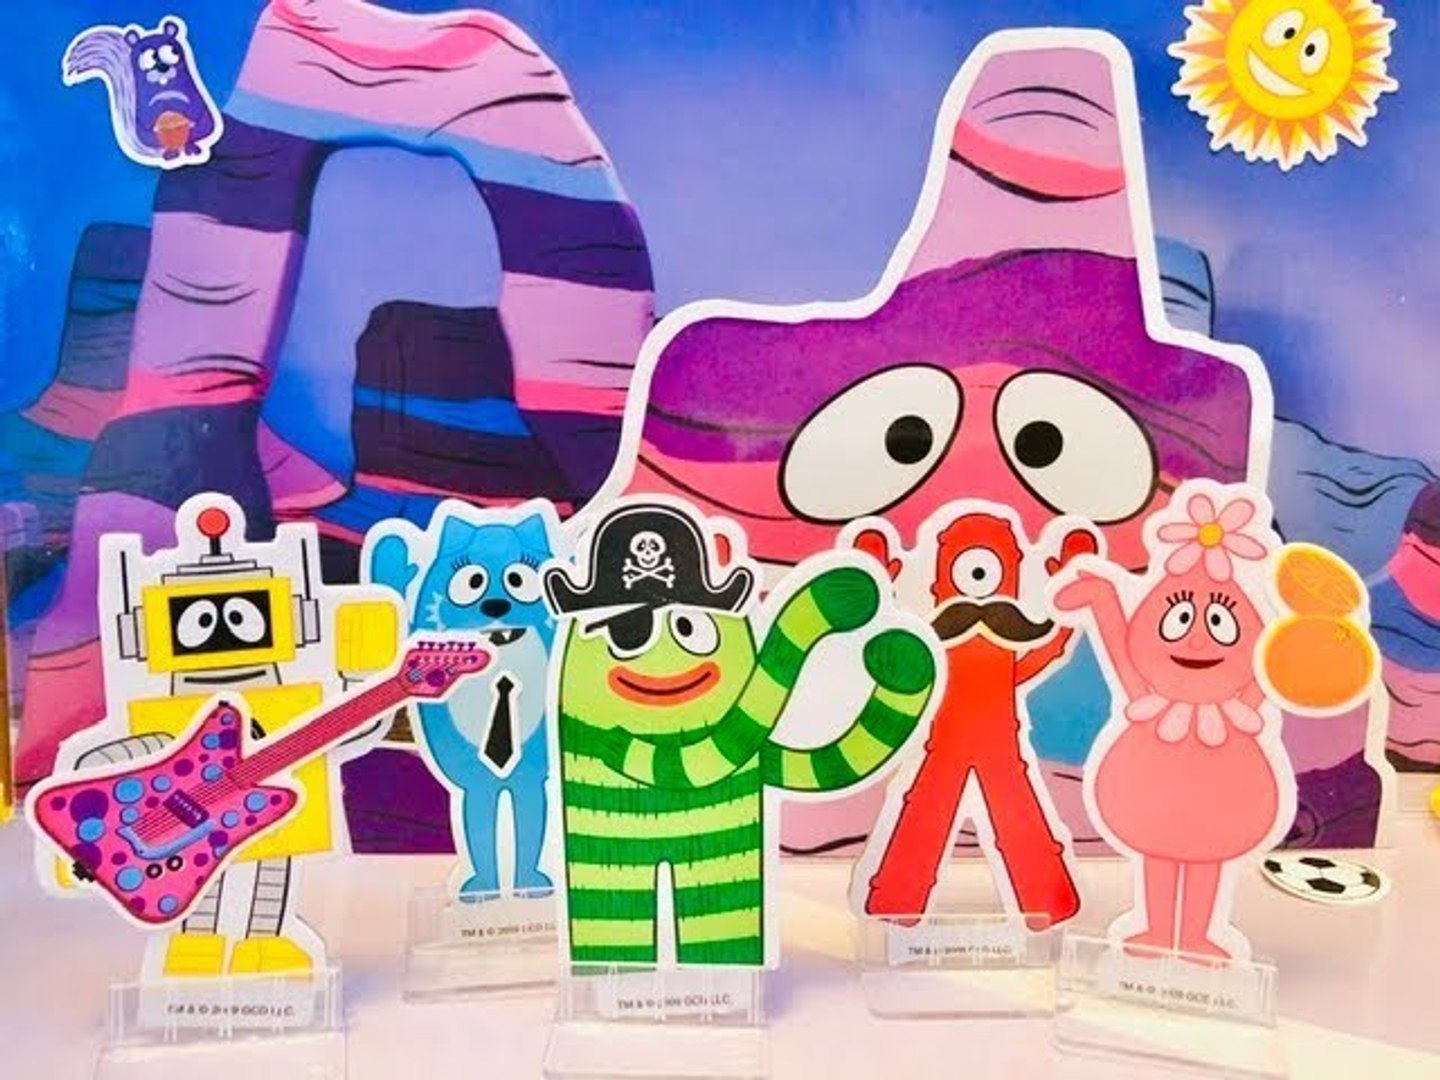 YO GABBA GABBA Musical BOOMBOX Mega Bloks Toys Play Set - video Dailymotion